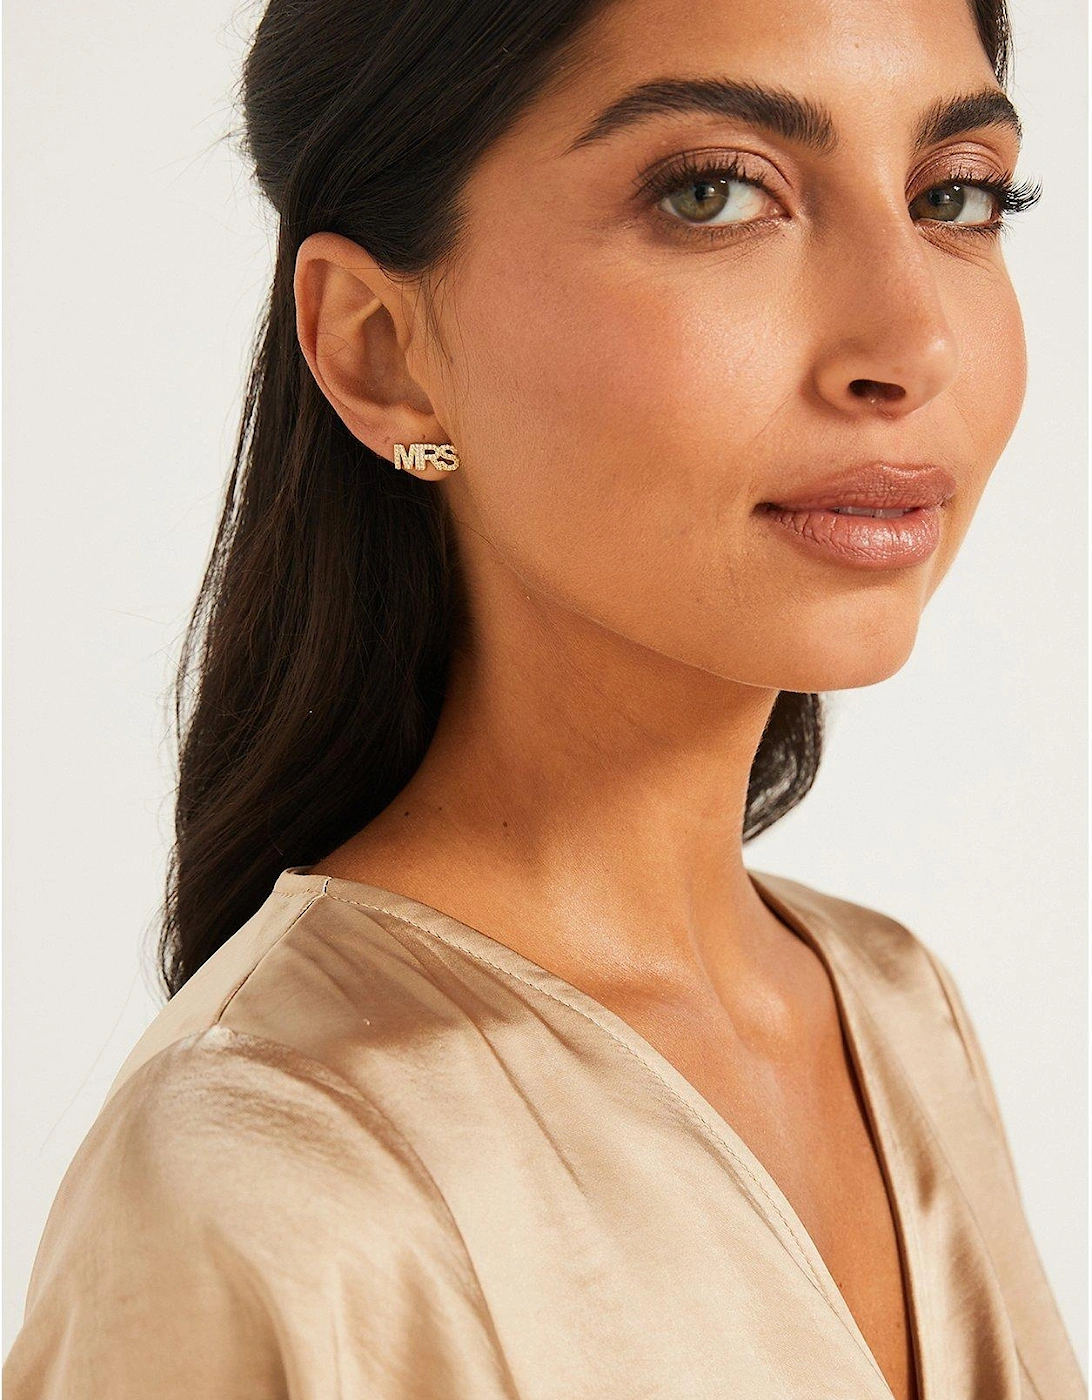 Mrs Initial Earrings - White Gold, 3 of 2